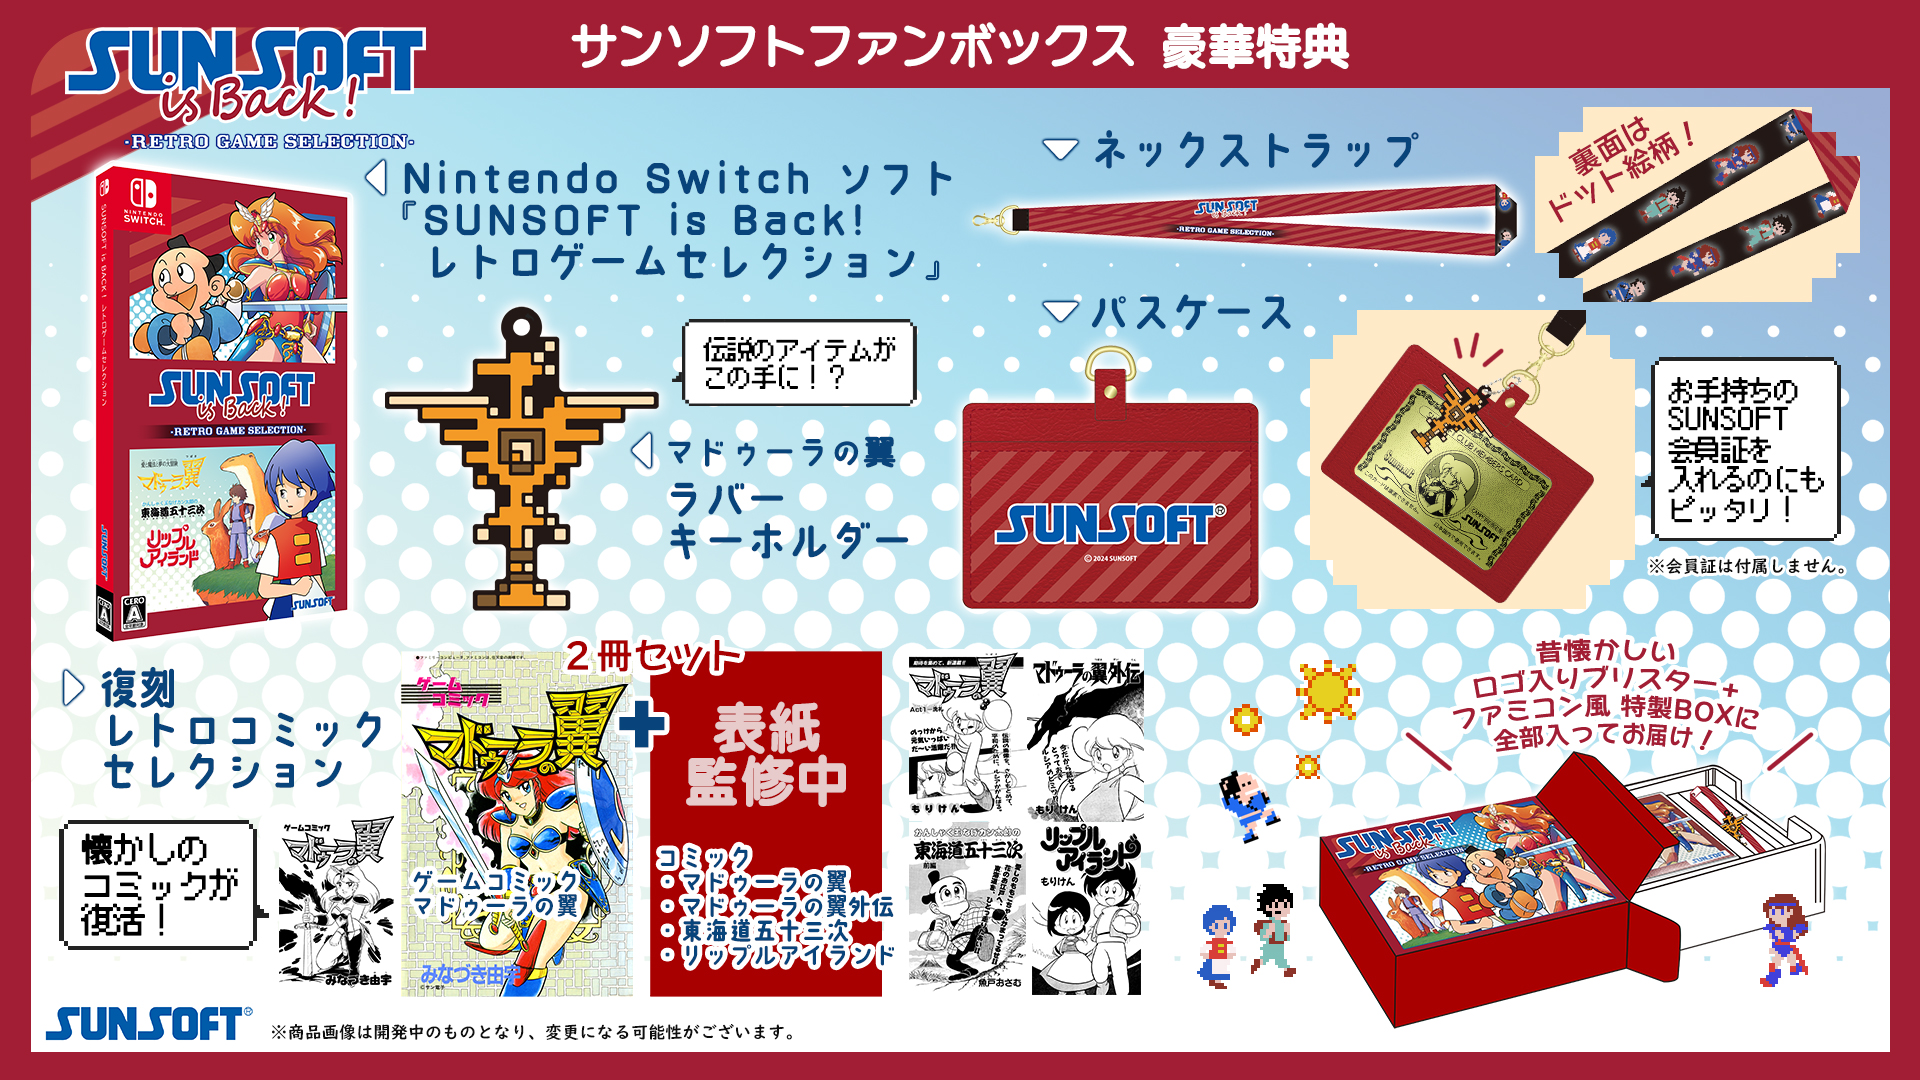 ikki-danketsu-sunsoft-is-back-retoro-game-collection-for-switch-yoyaku8